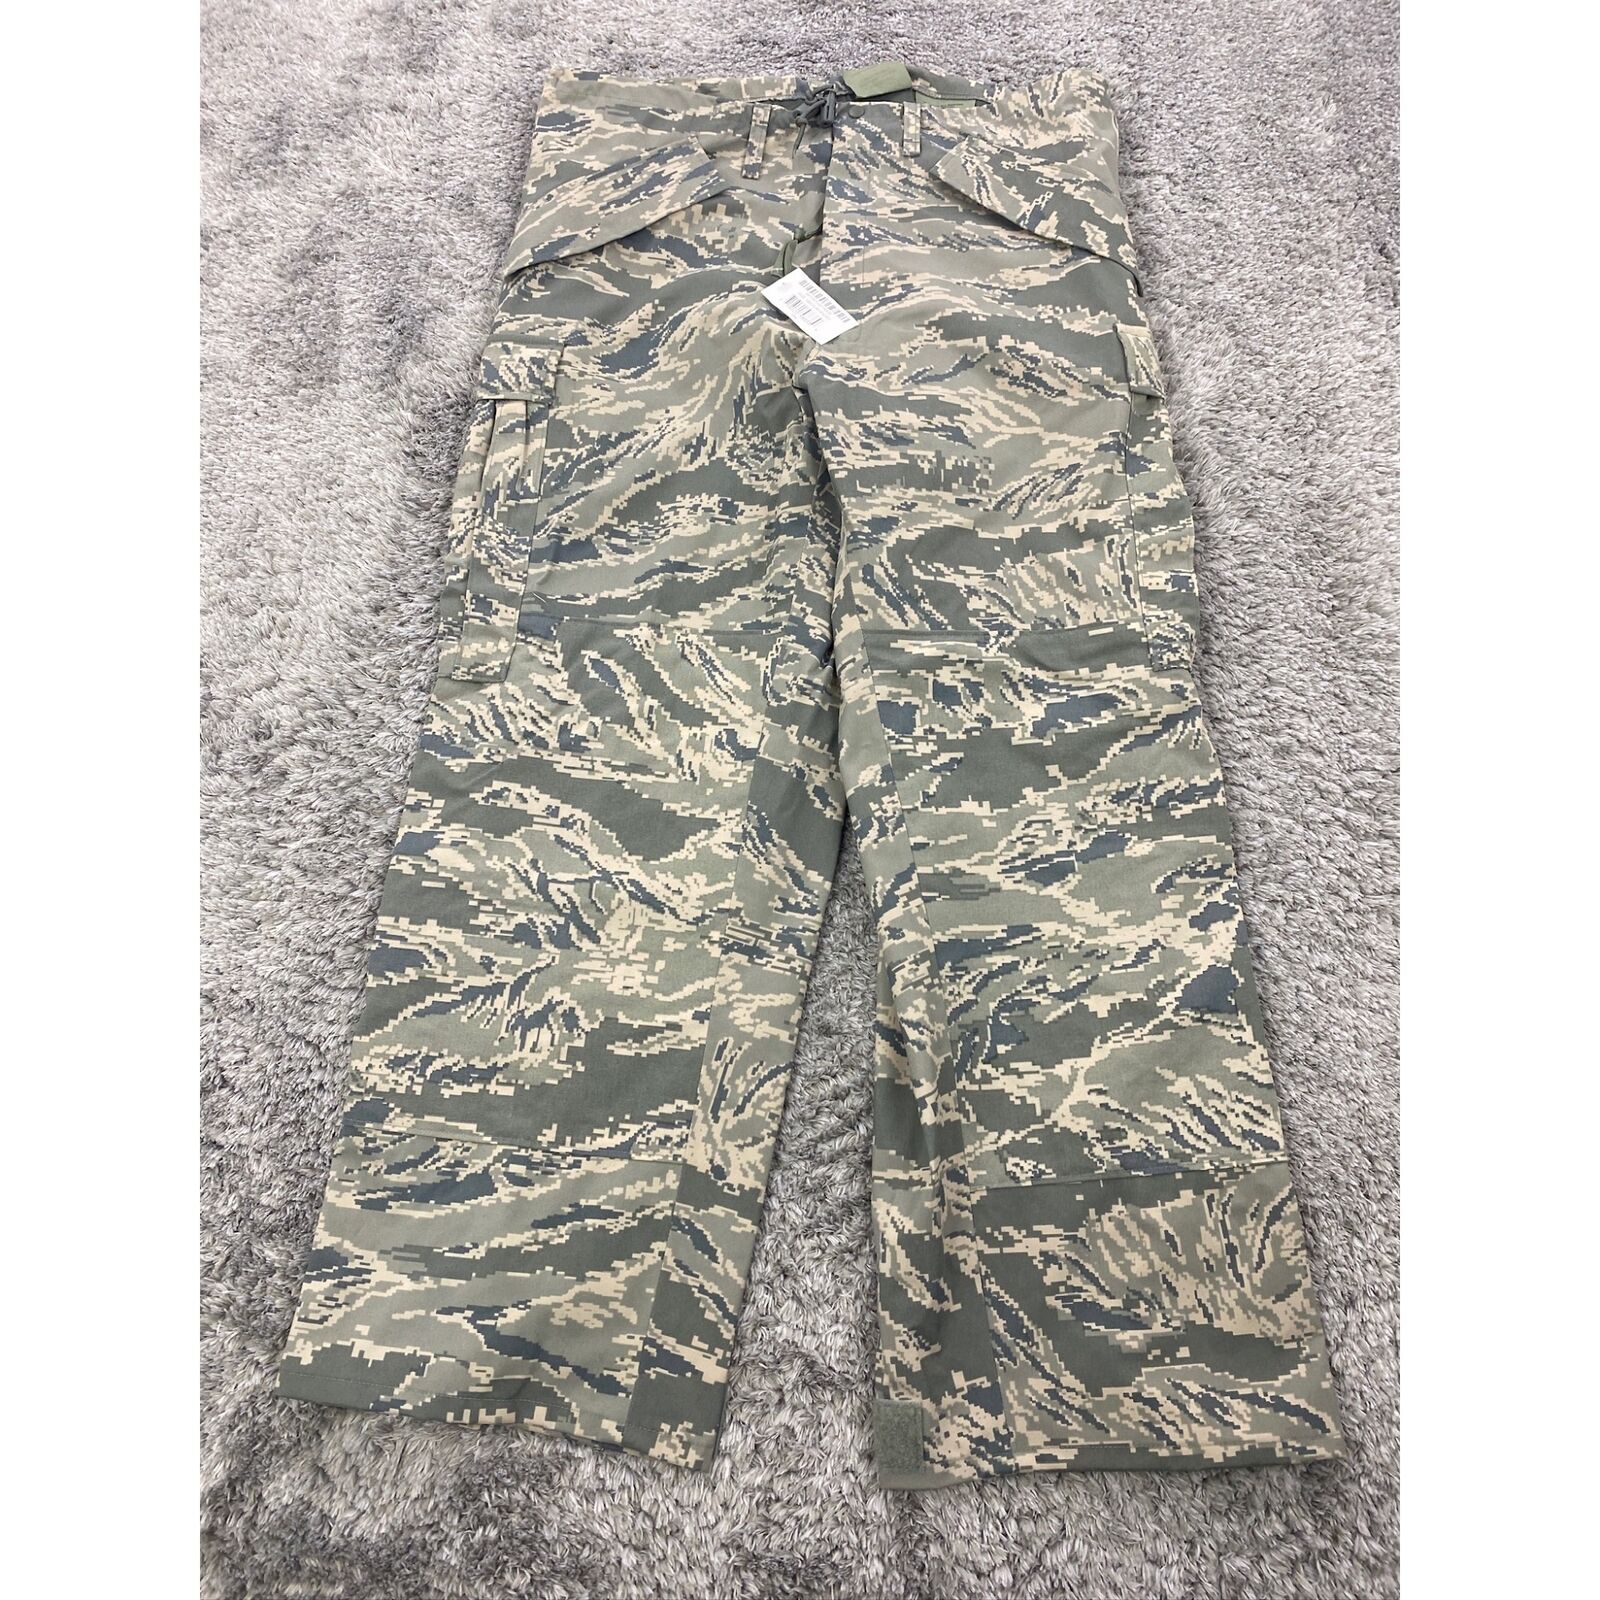 USAF Pants Mens Medium Camo Trousers All Purpose Environmental Military Goretex